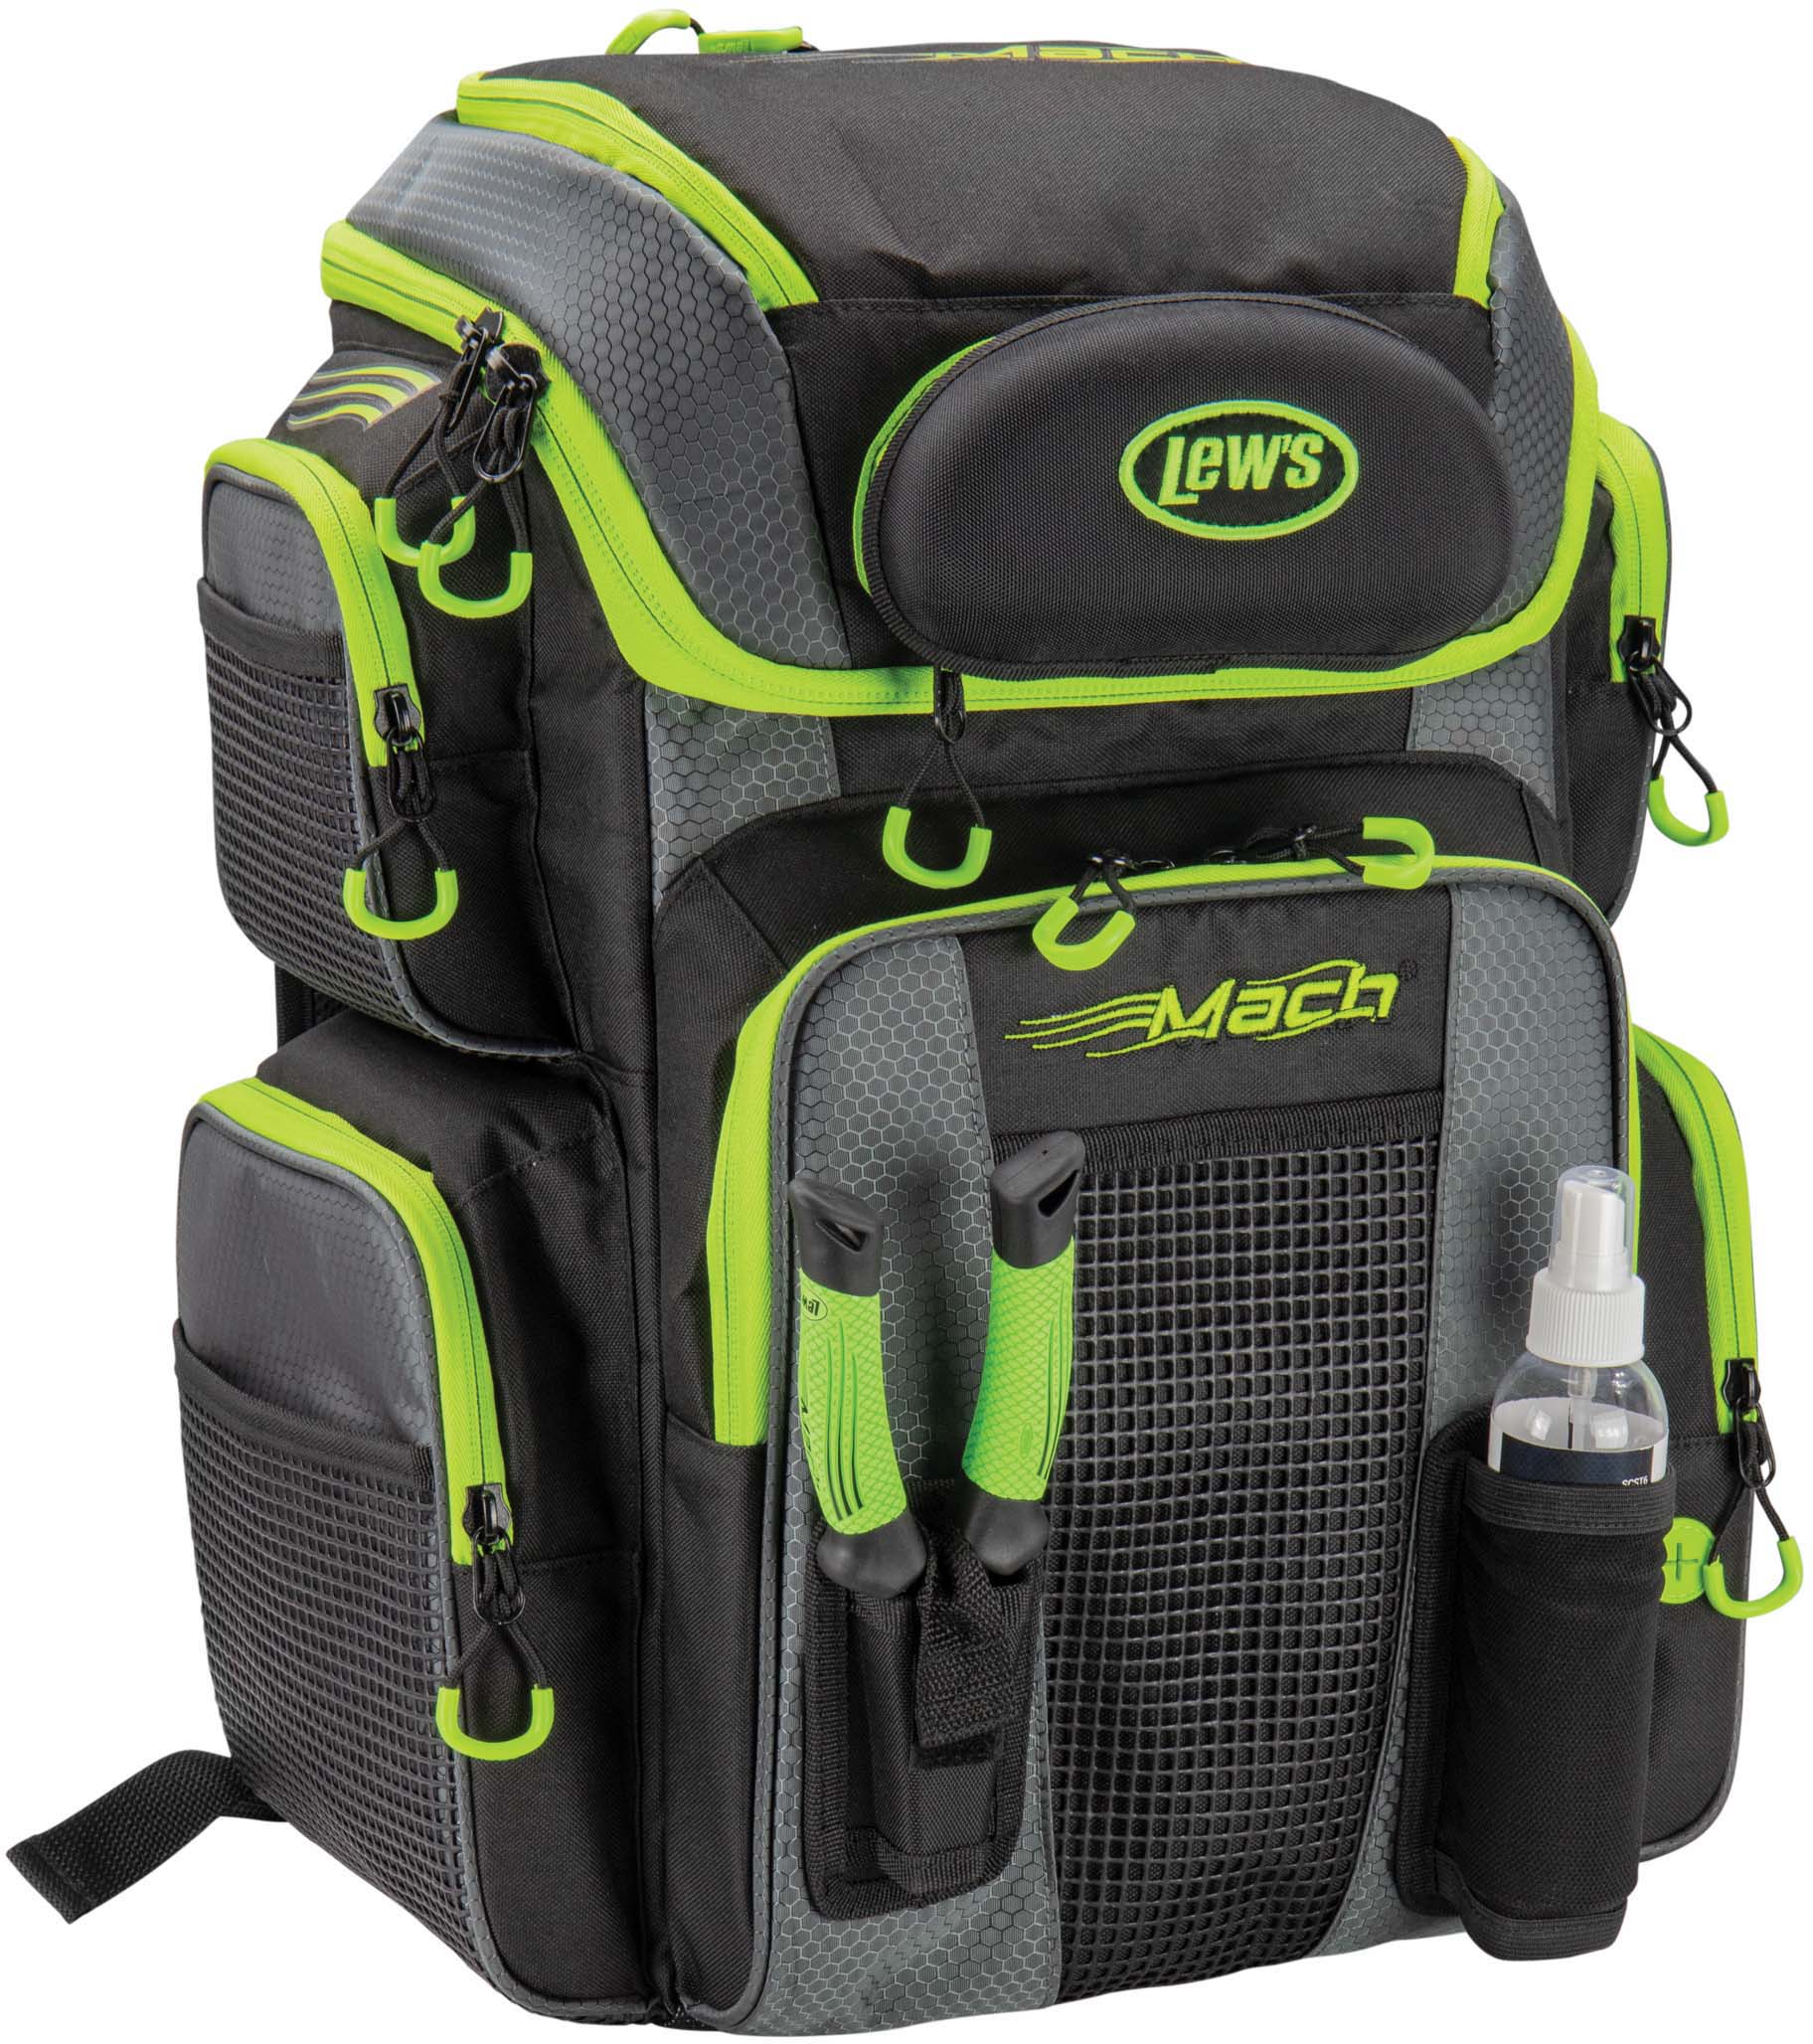 MACH Hatchpack Tackle Bag